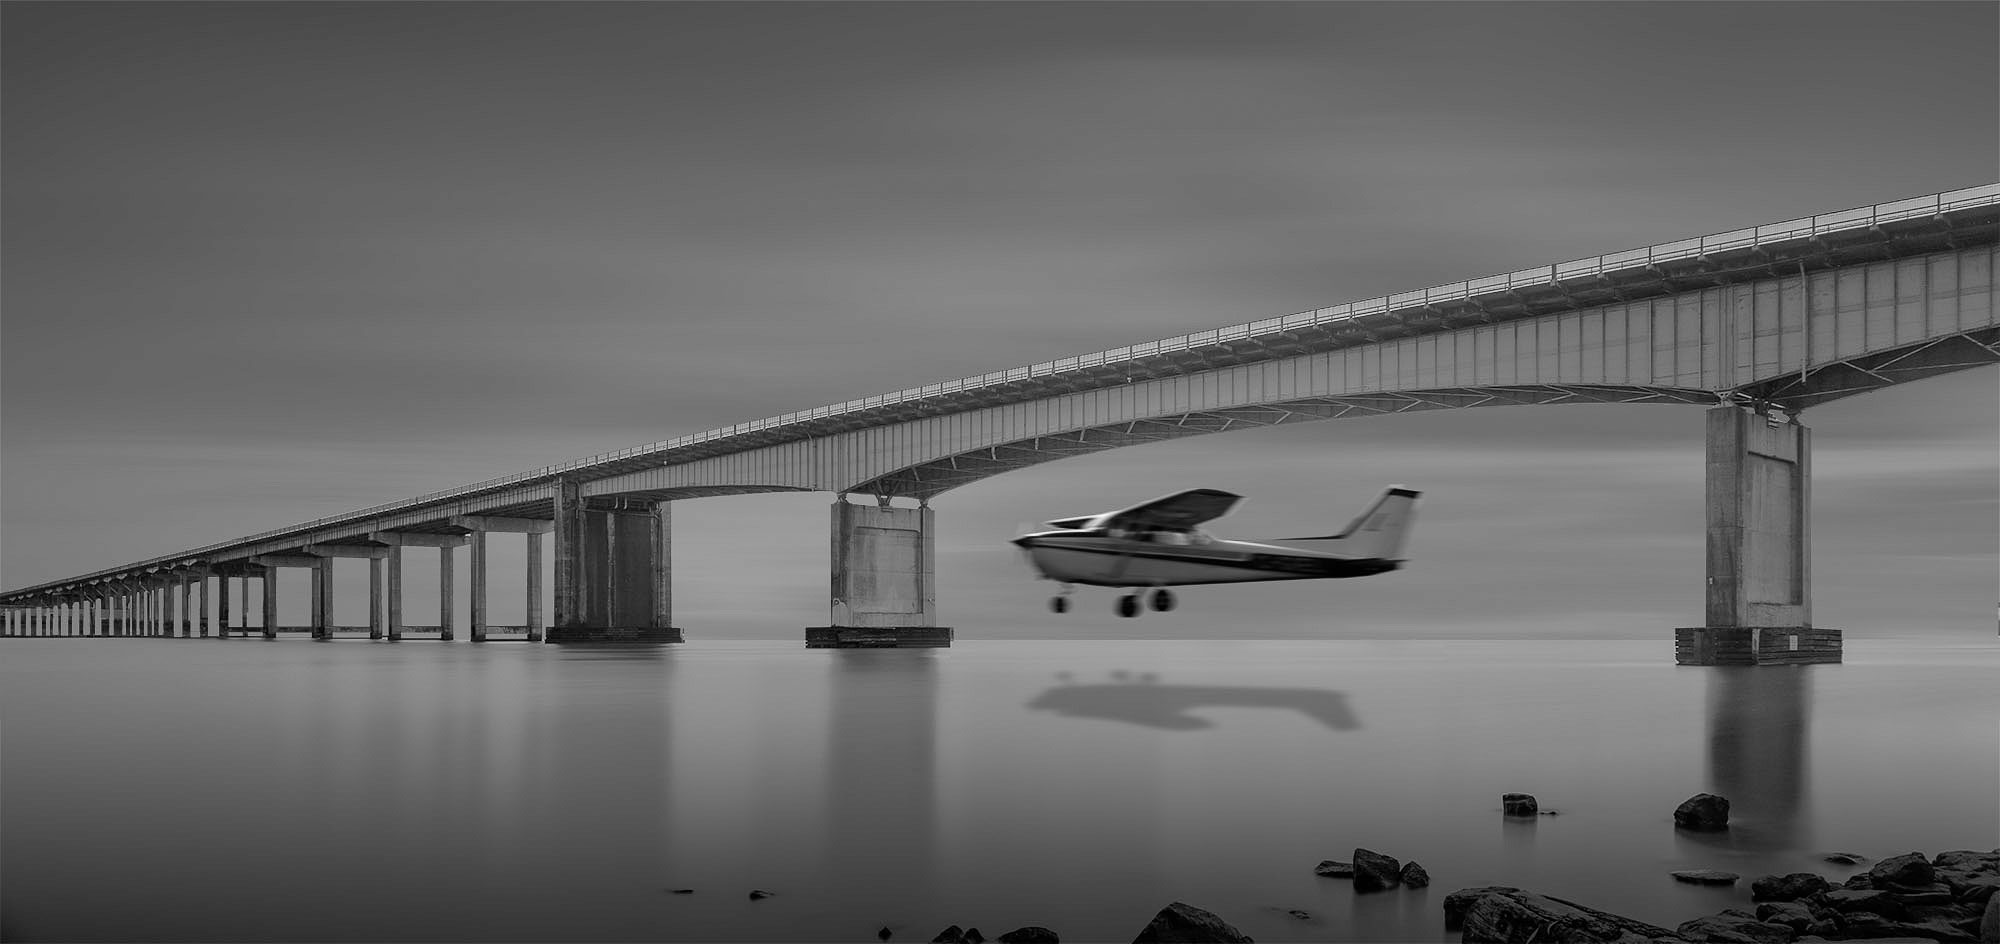 Flying-under-the-bridge-rev2.jpg